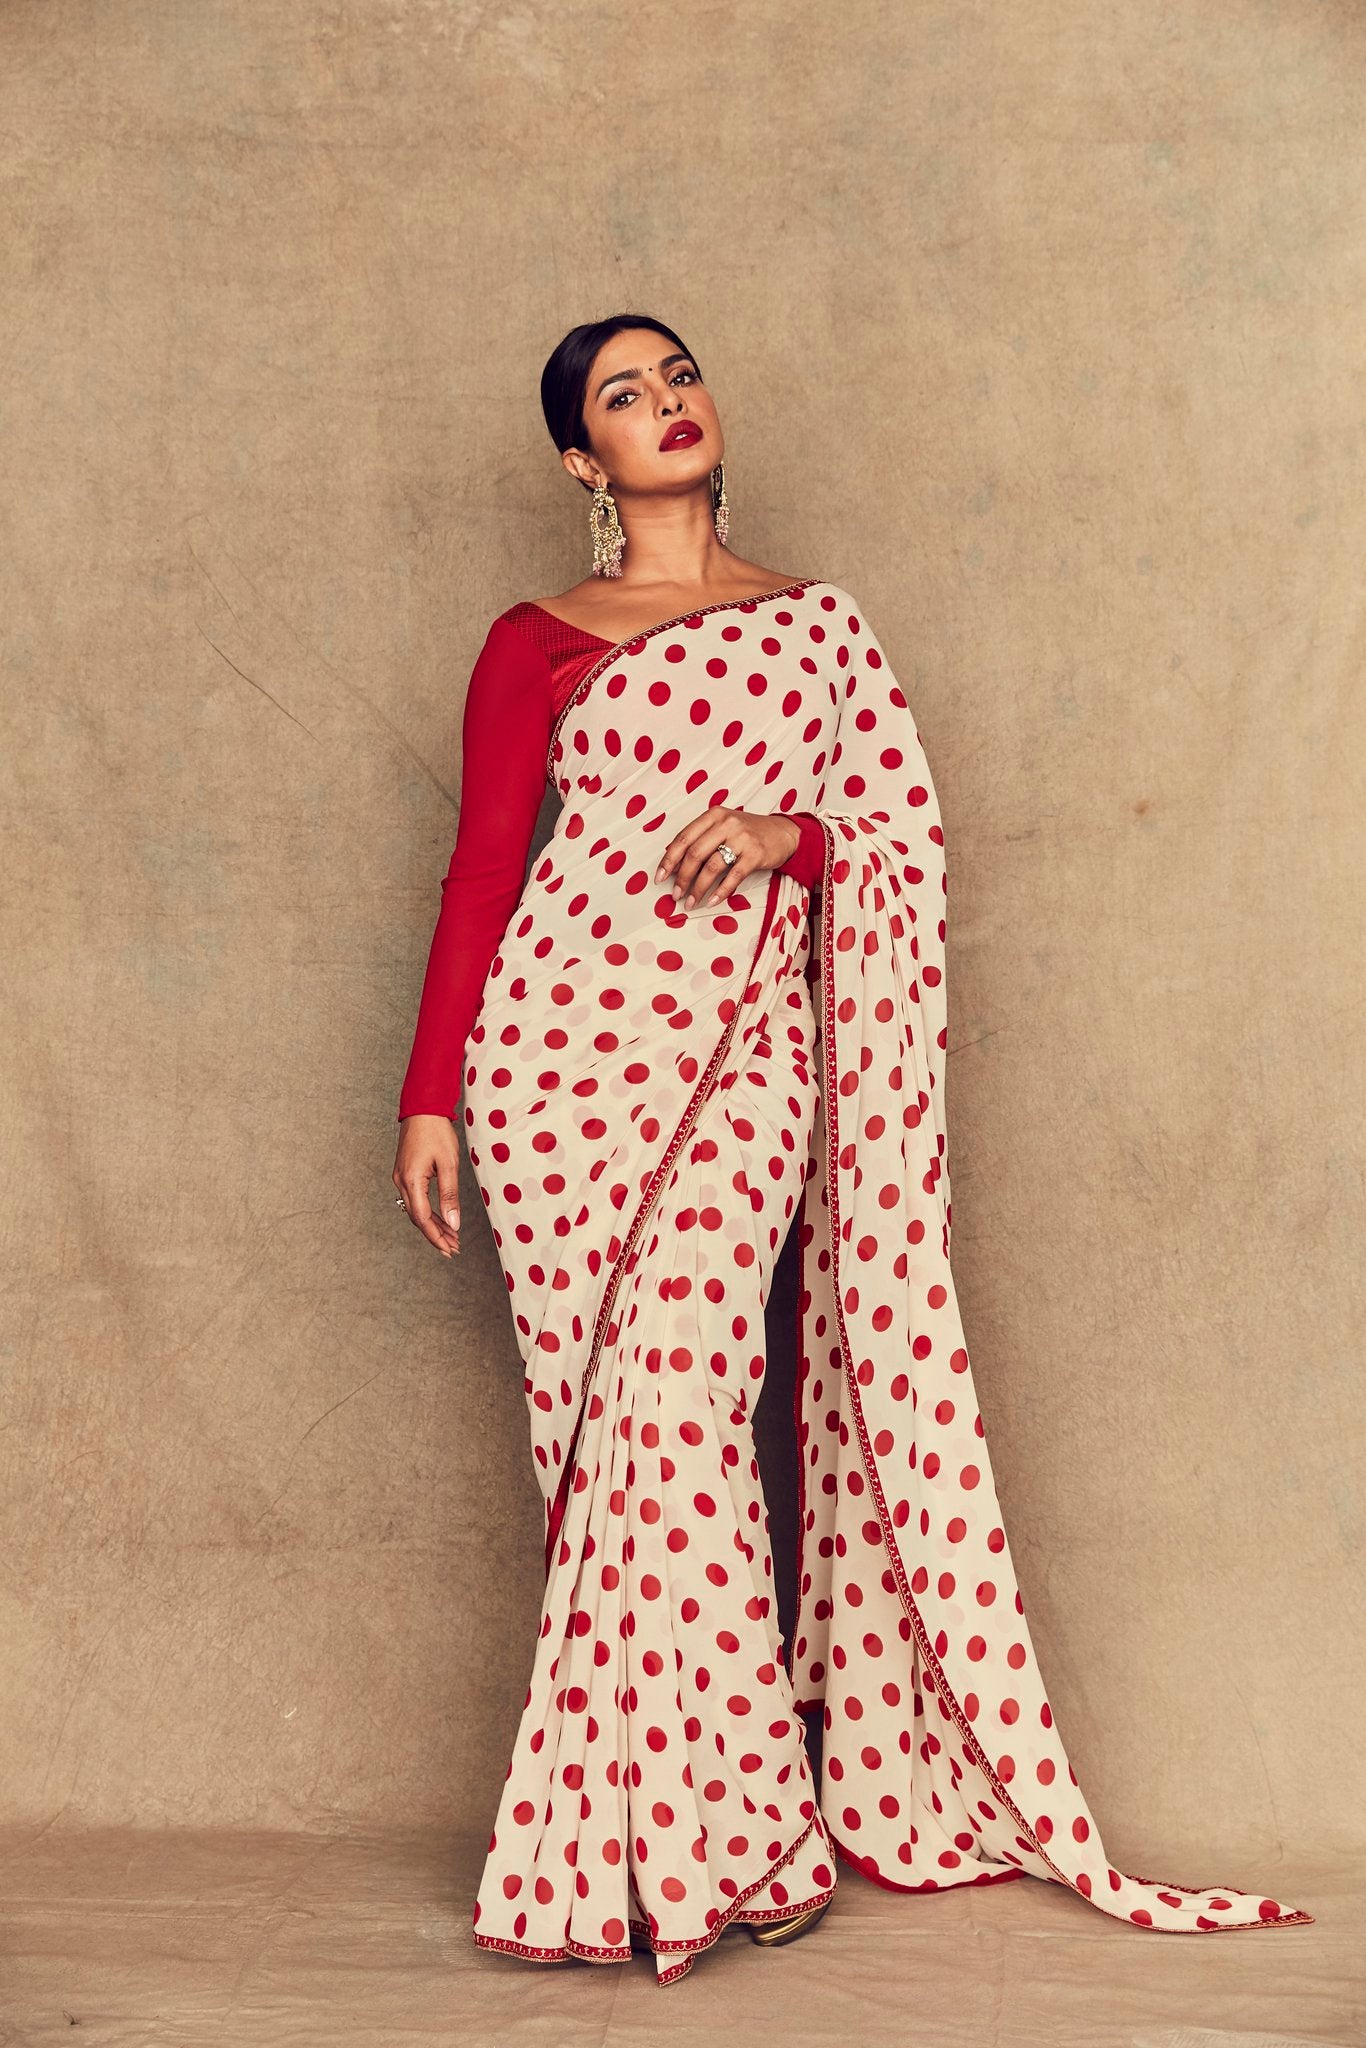 Priyanka Chopra in Polka Dot Printed Red & White Saree